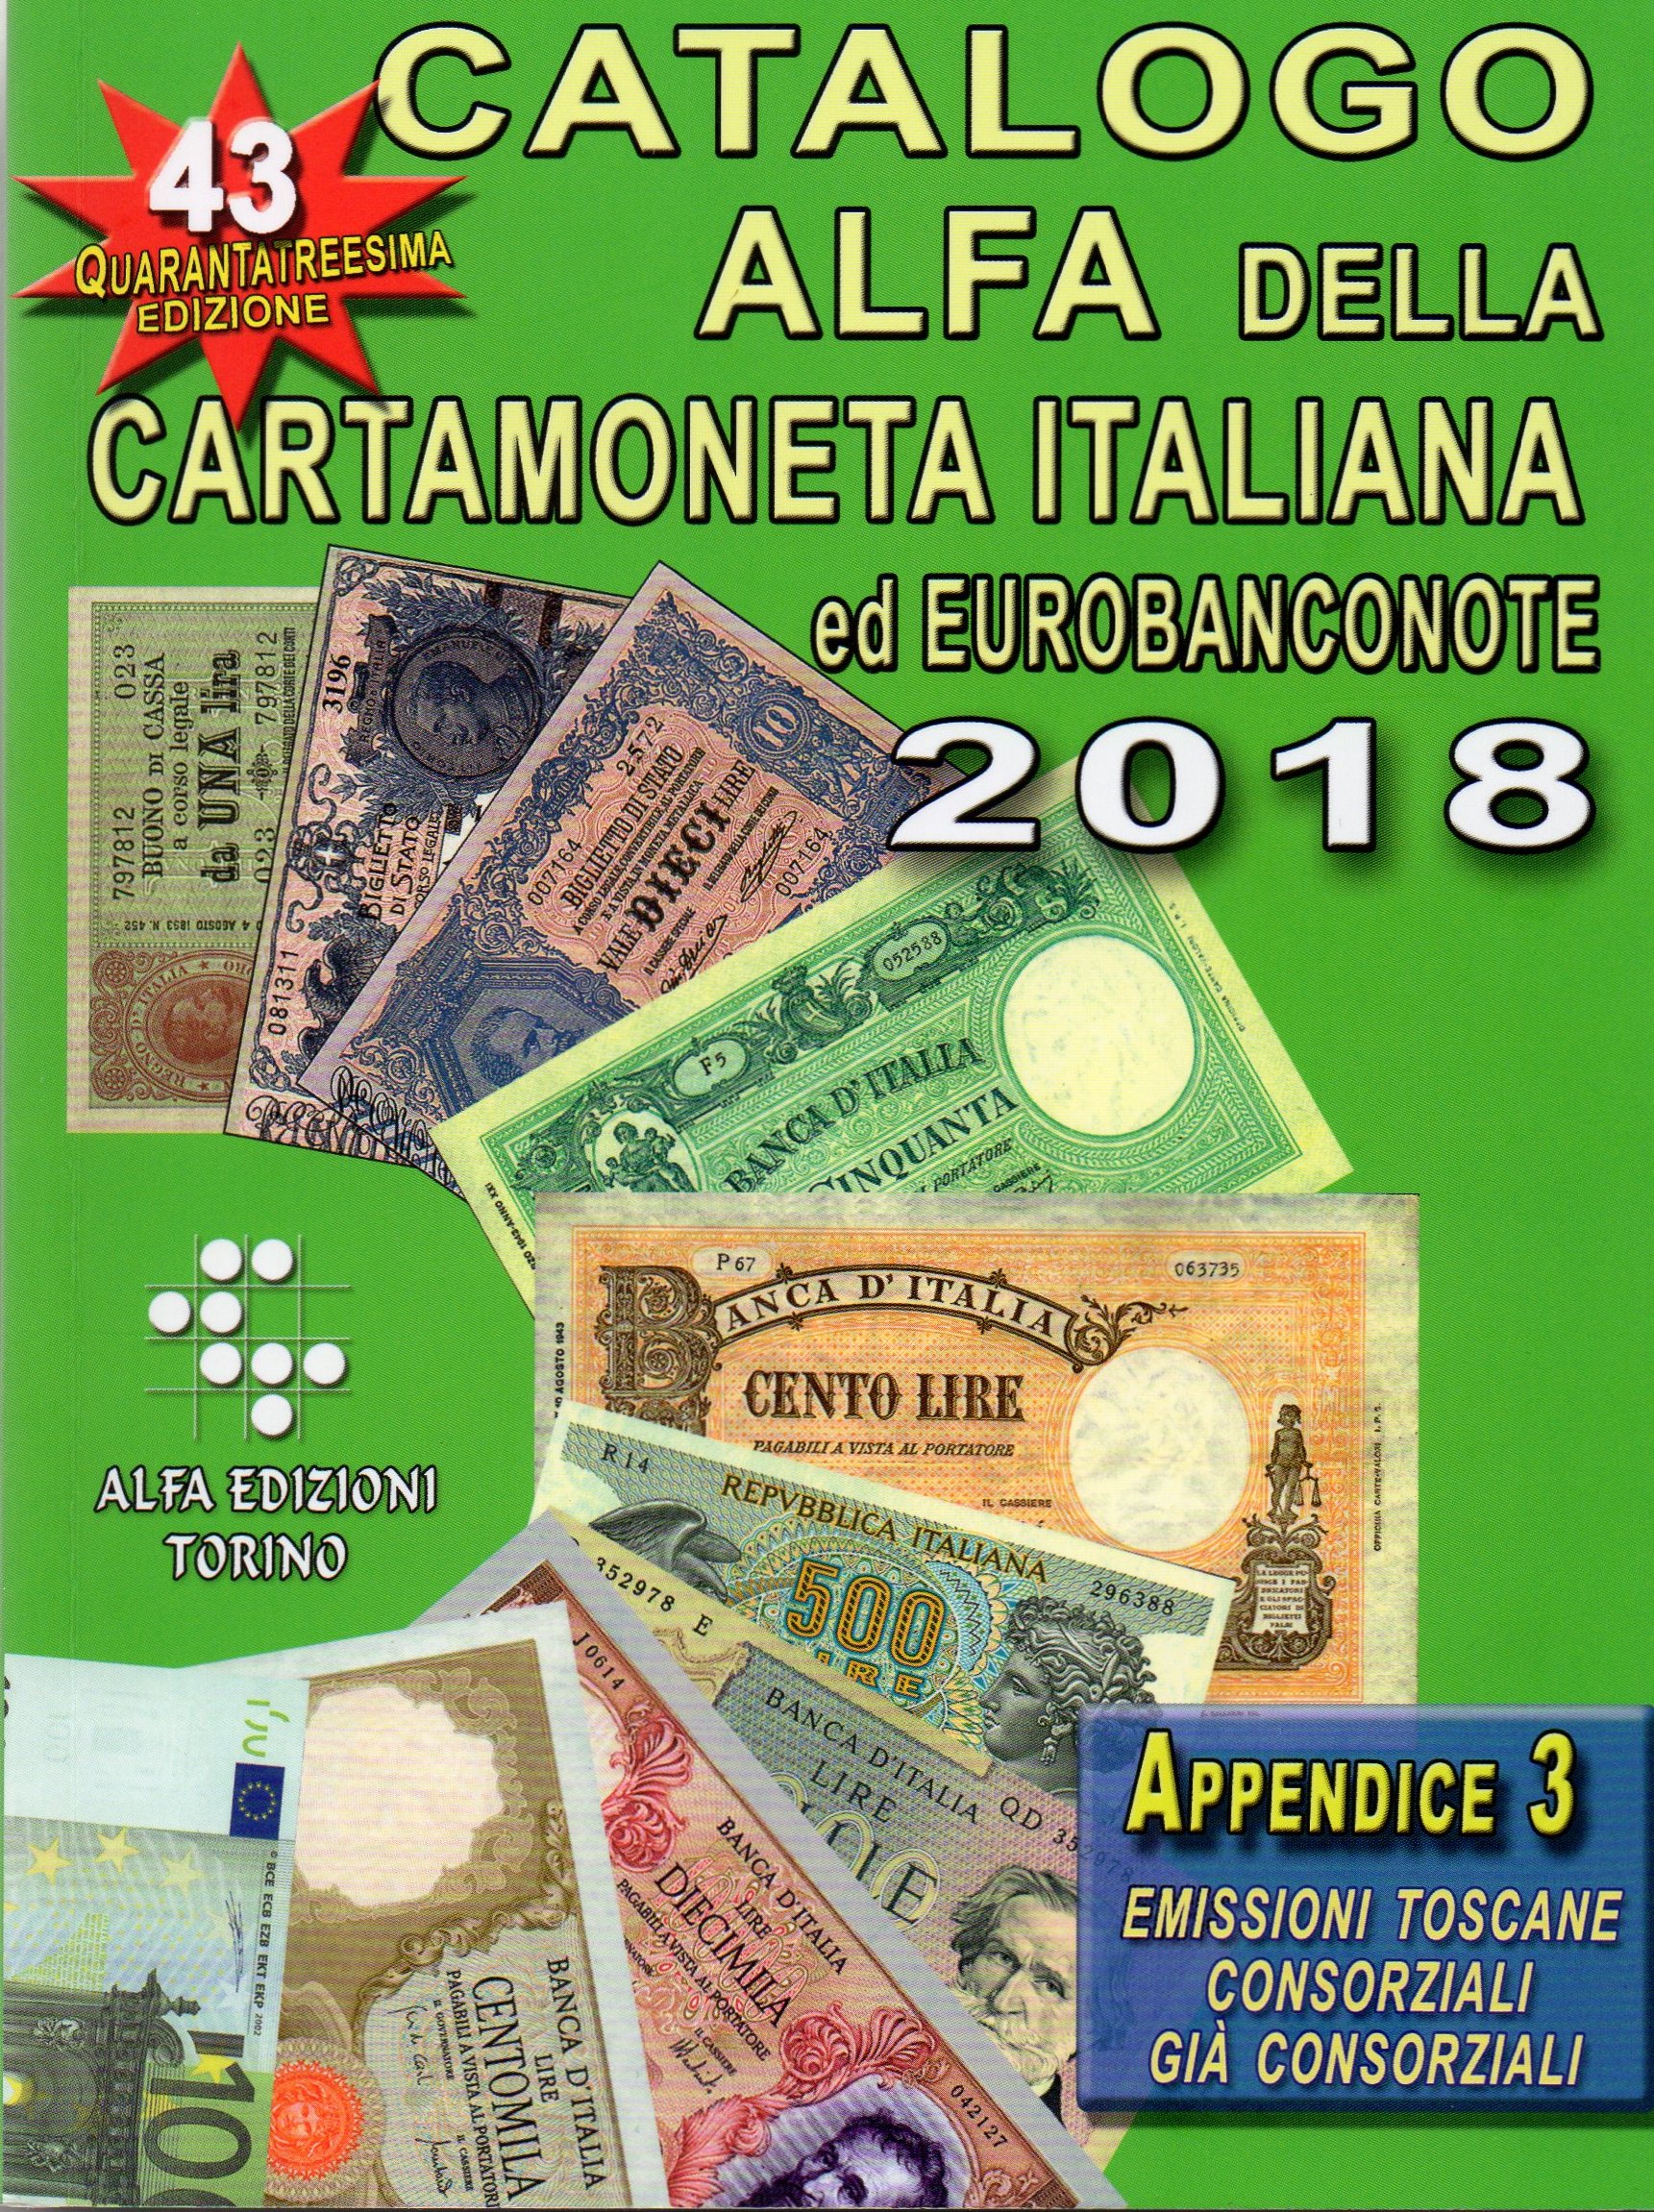 CATALOGO ALFA DELLA CARTAMONETA ITALIANA ED EUROBANCONOTE 2018